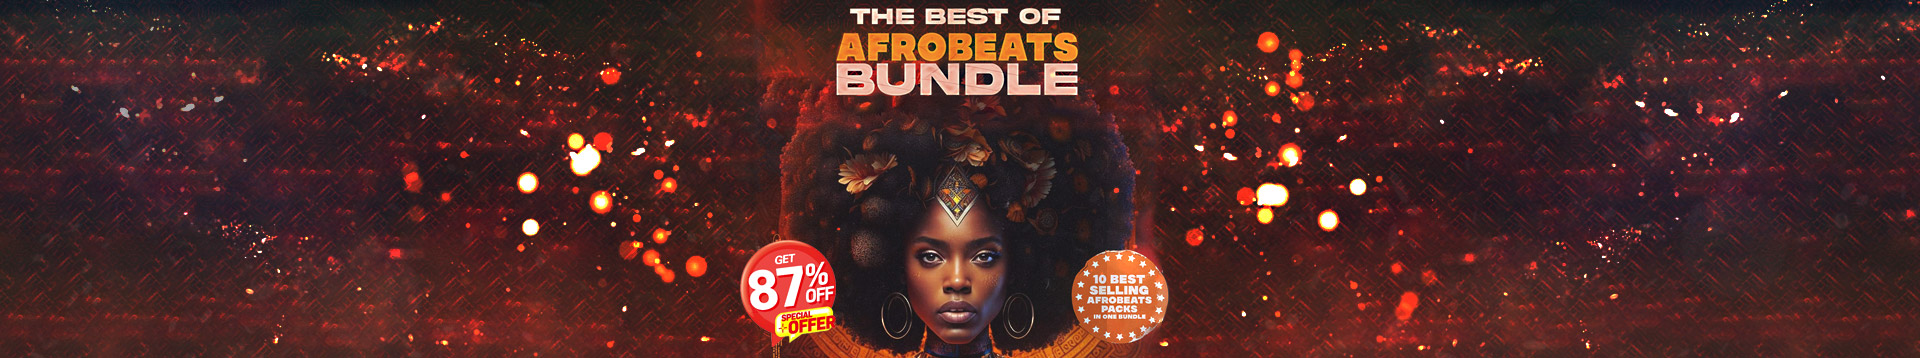 The Best of Afrobeats Bundle